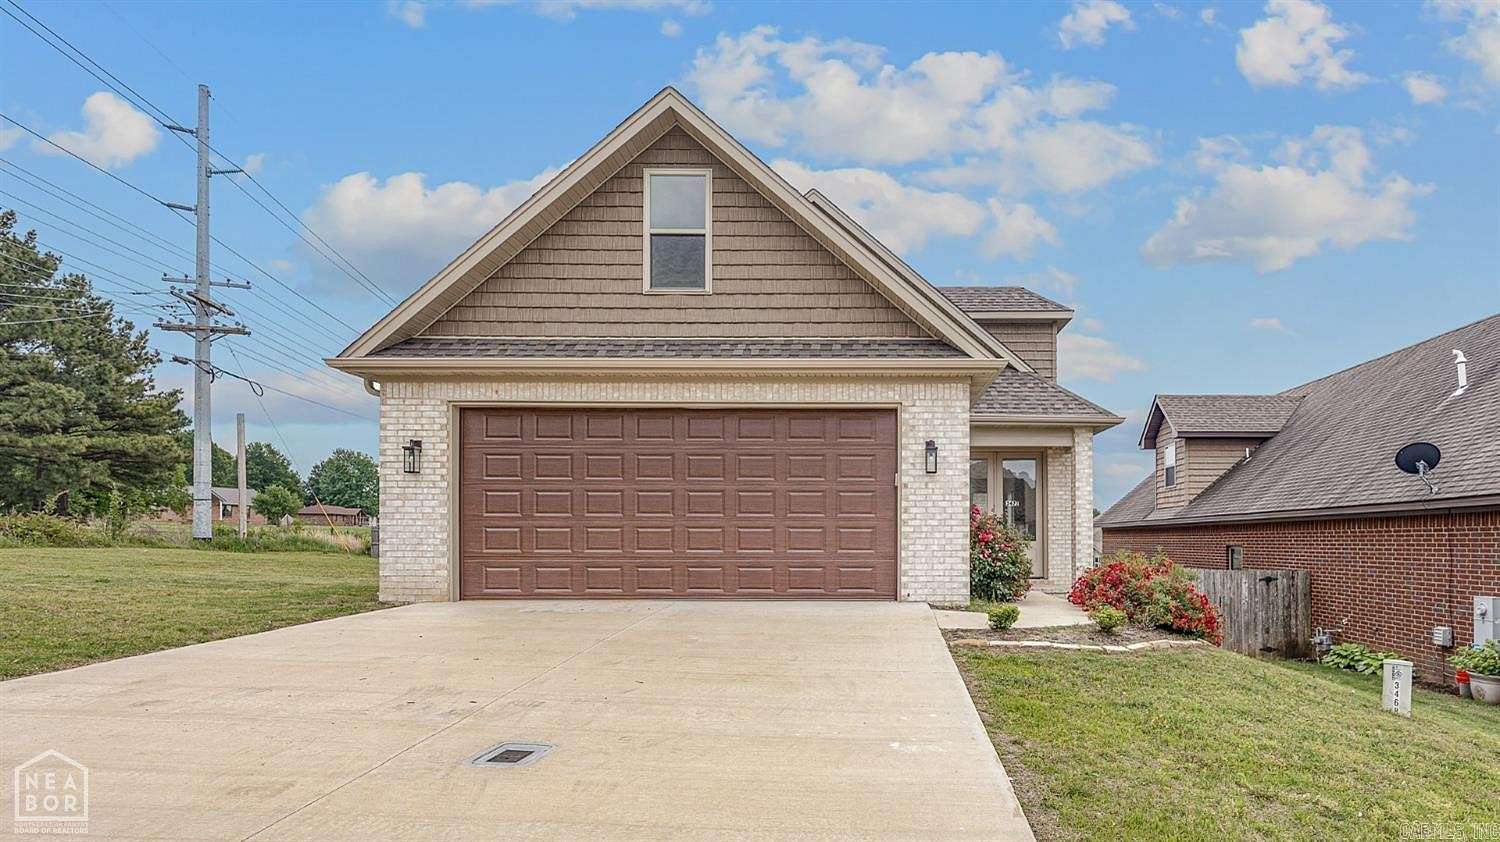 0.21 Acres of Residential Land with Home for Sale in Jonesboro, Arkansas